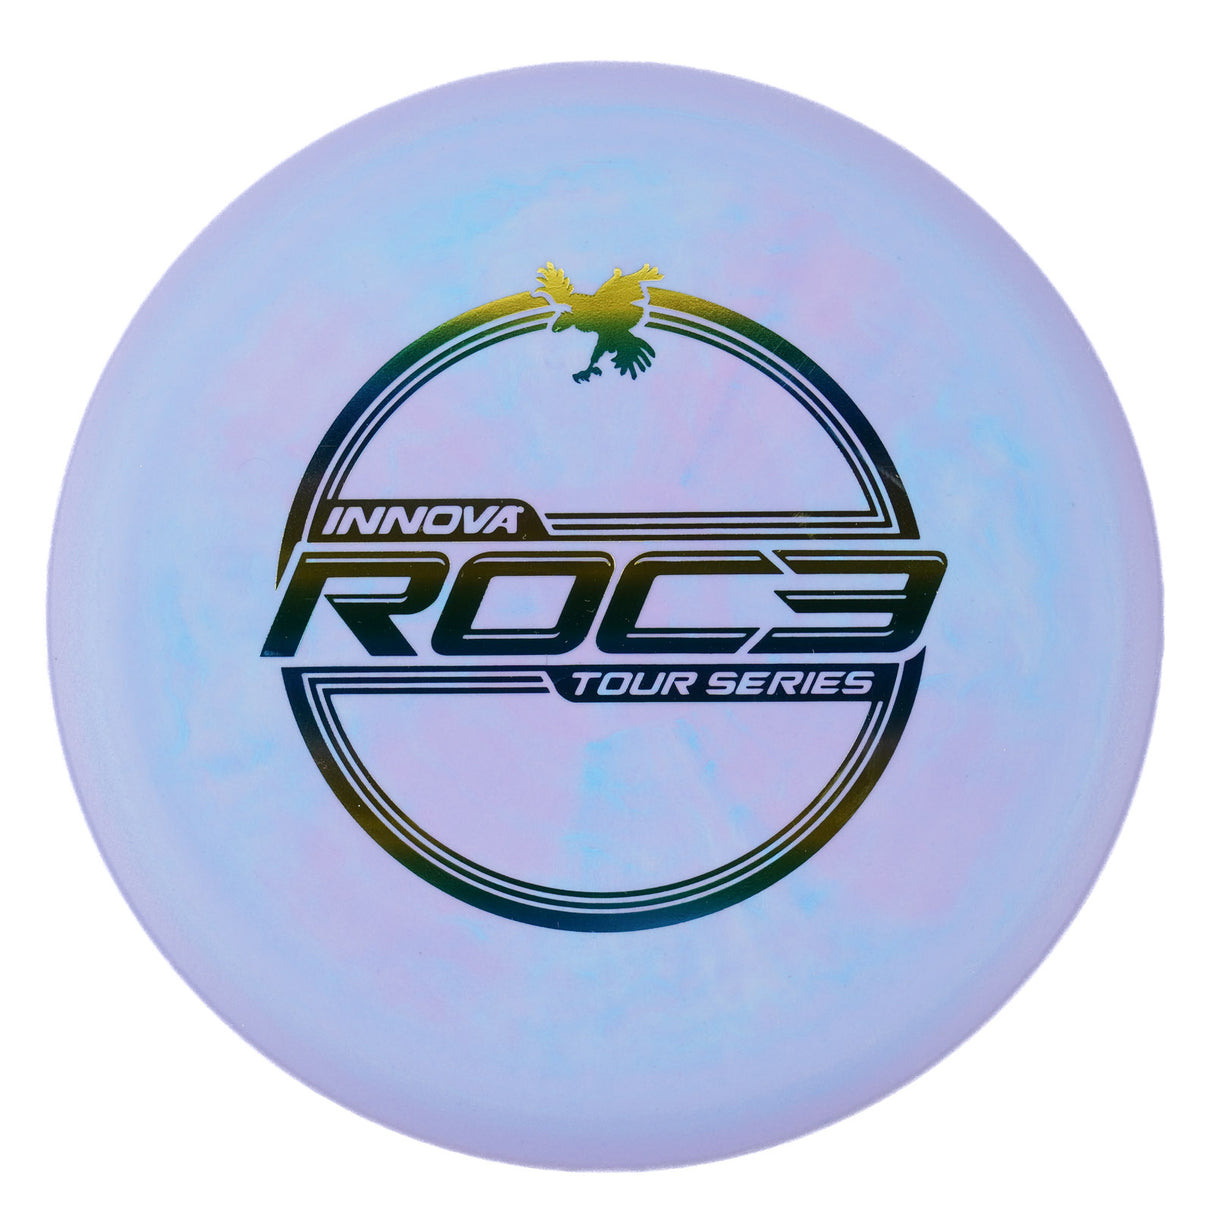 Innova Roc3 - Tour Series Pro Color Glow 178g | Style 0001